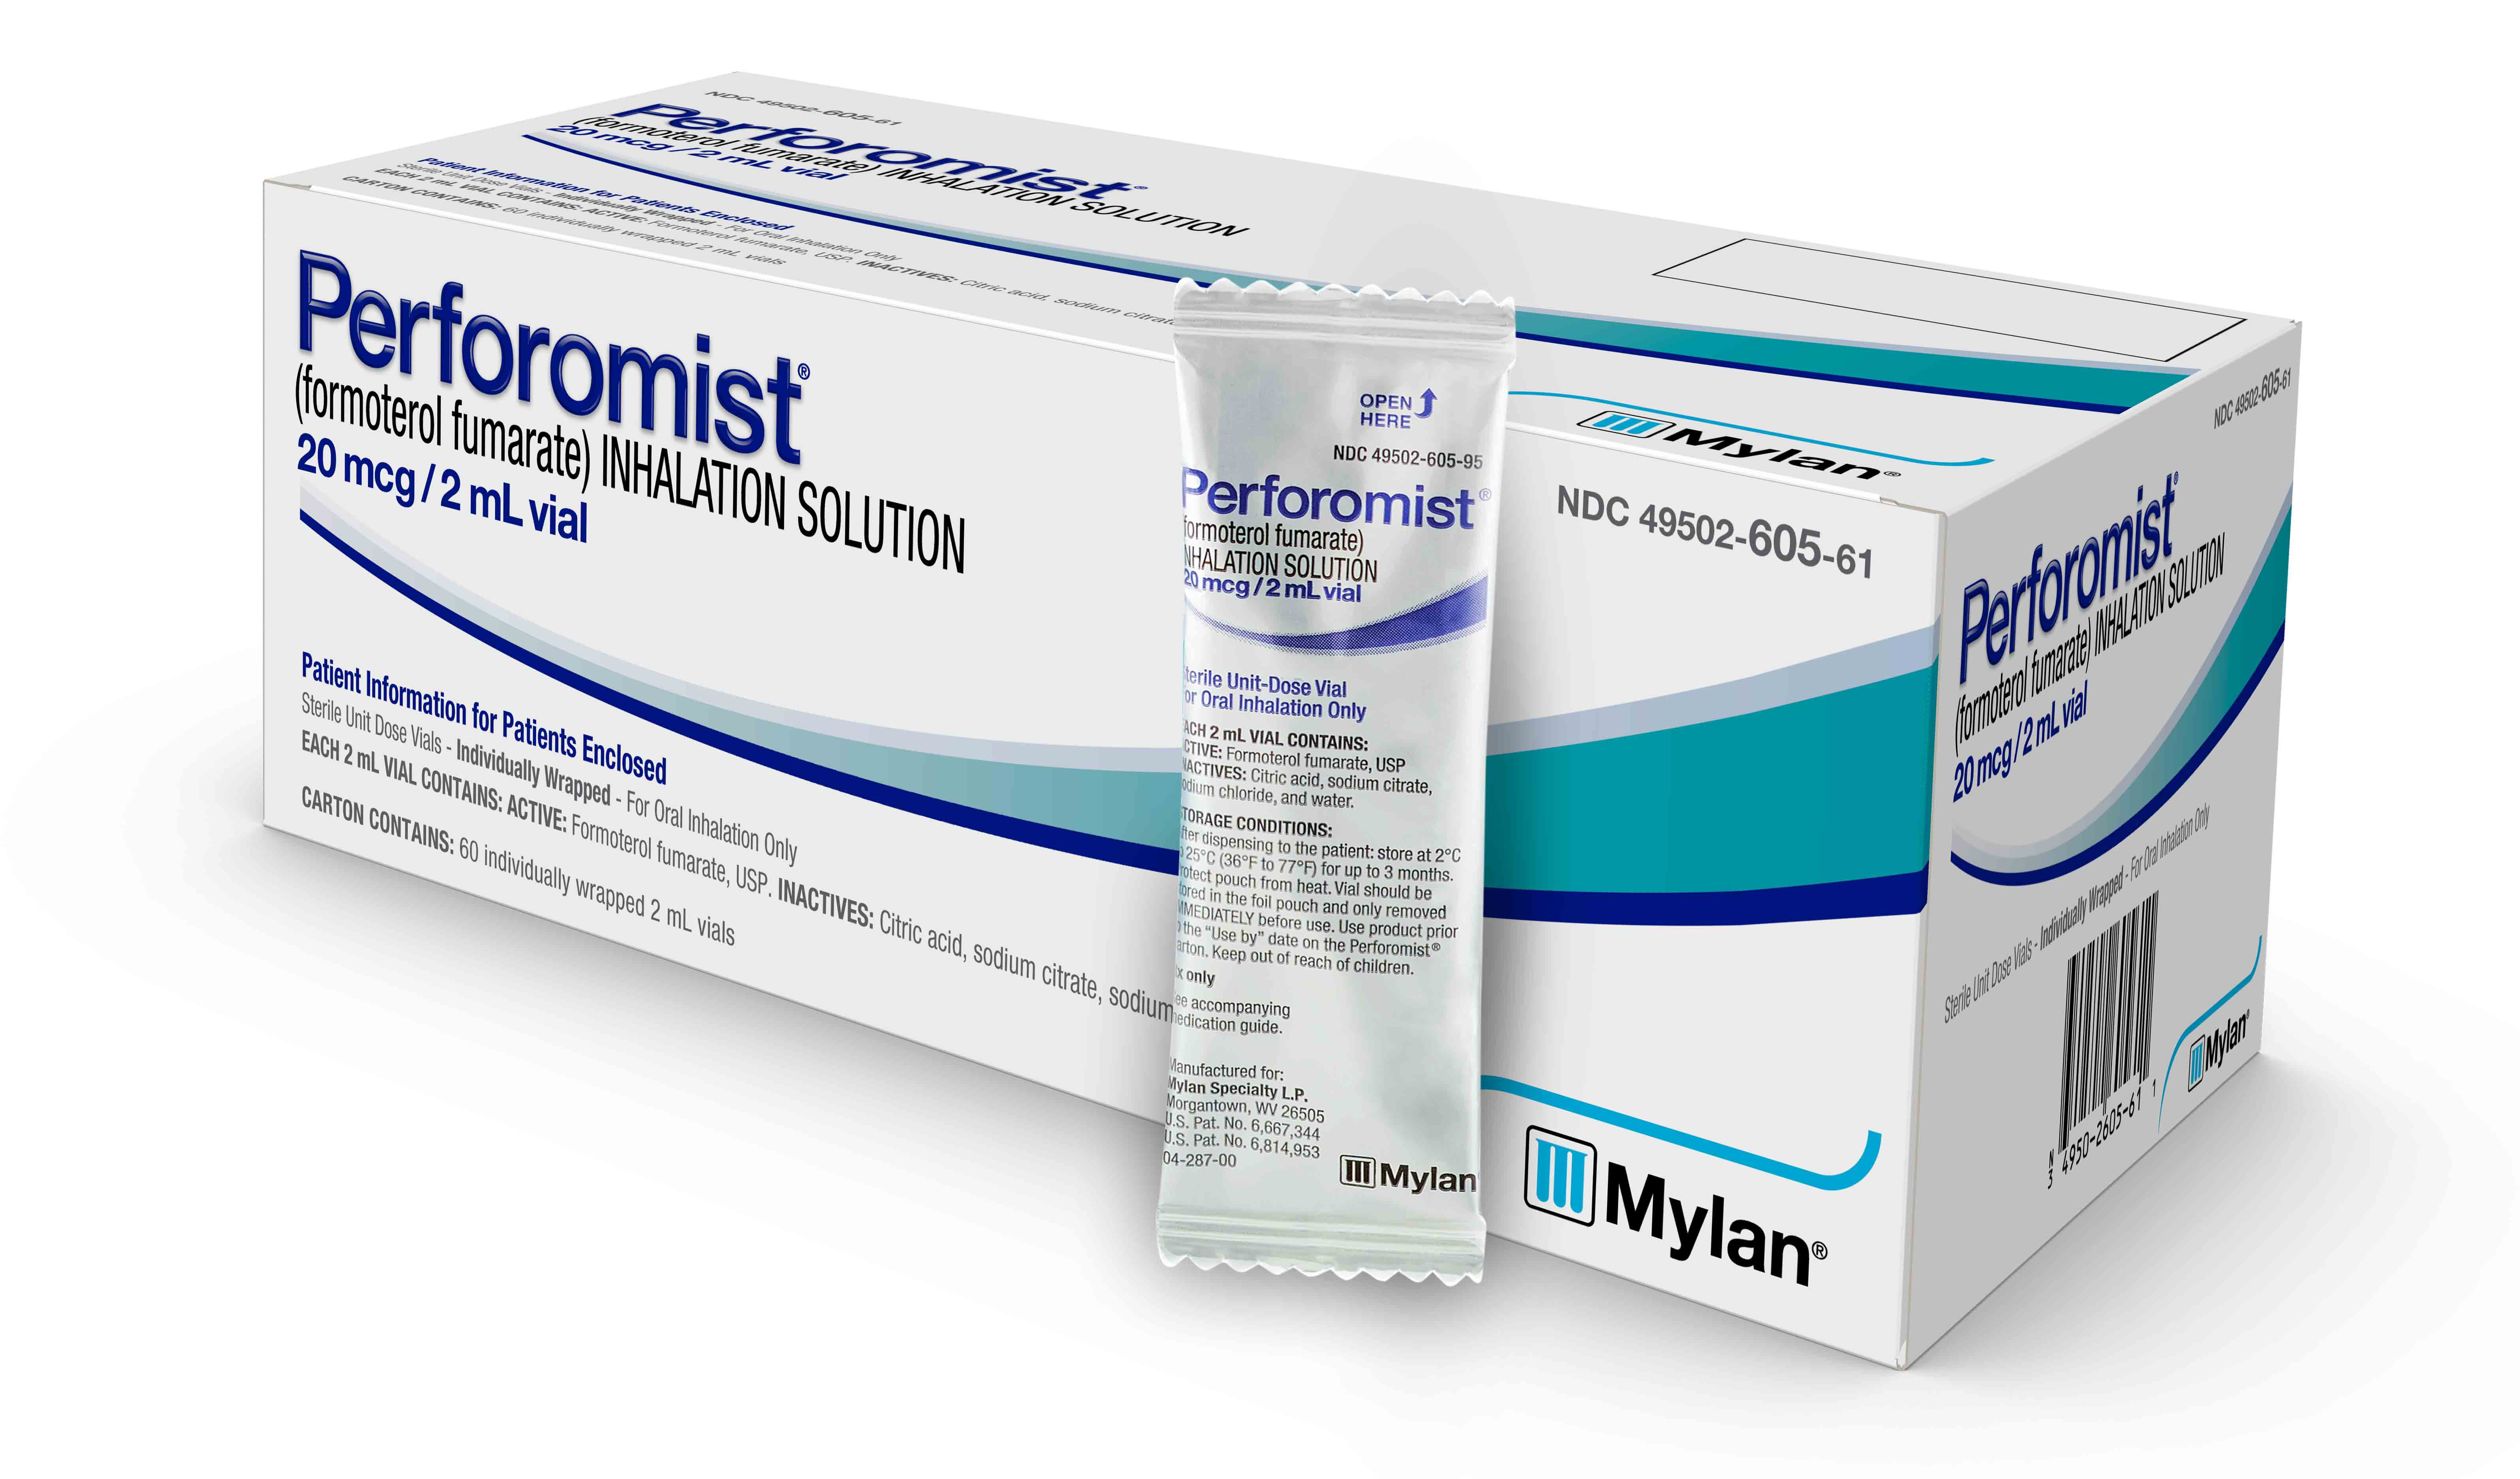 Perforomist (formoterol fumarate) product packaging